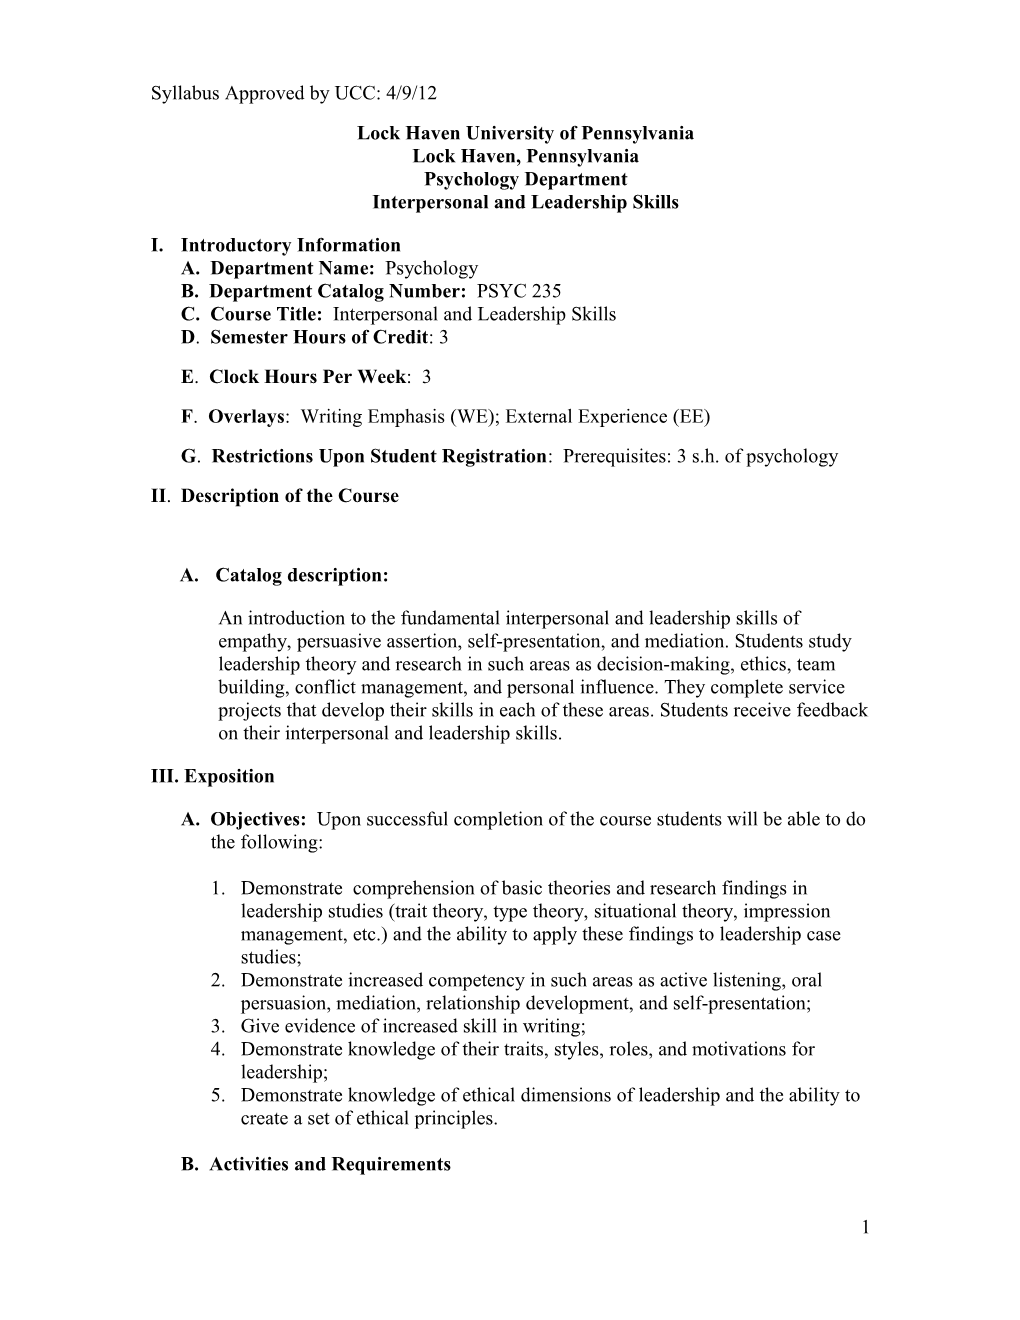 Interpersonal and Leadership Skills Syllabus for Psychology 235, Fall 2003